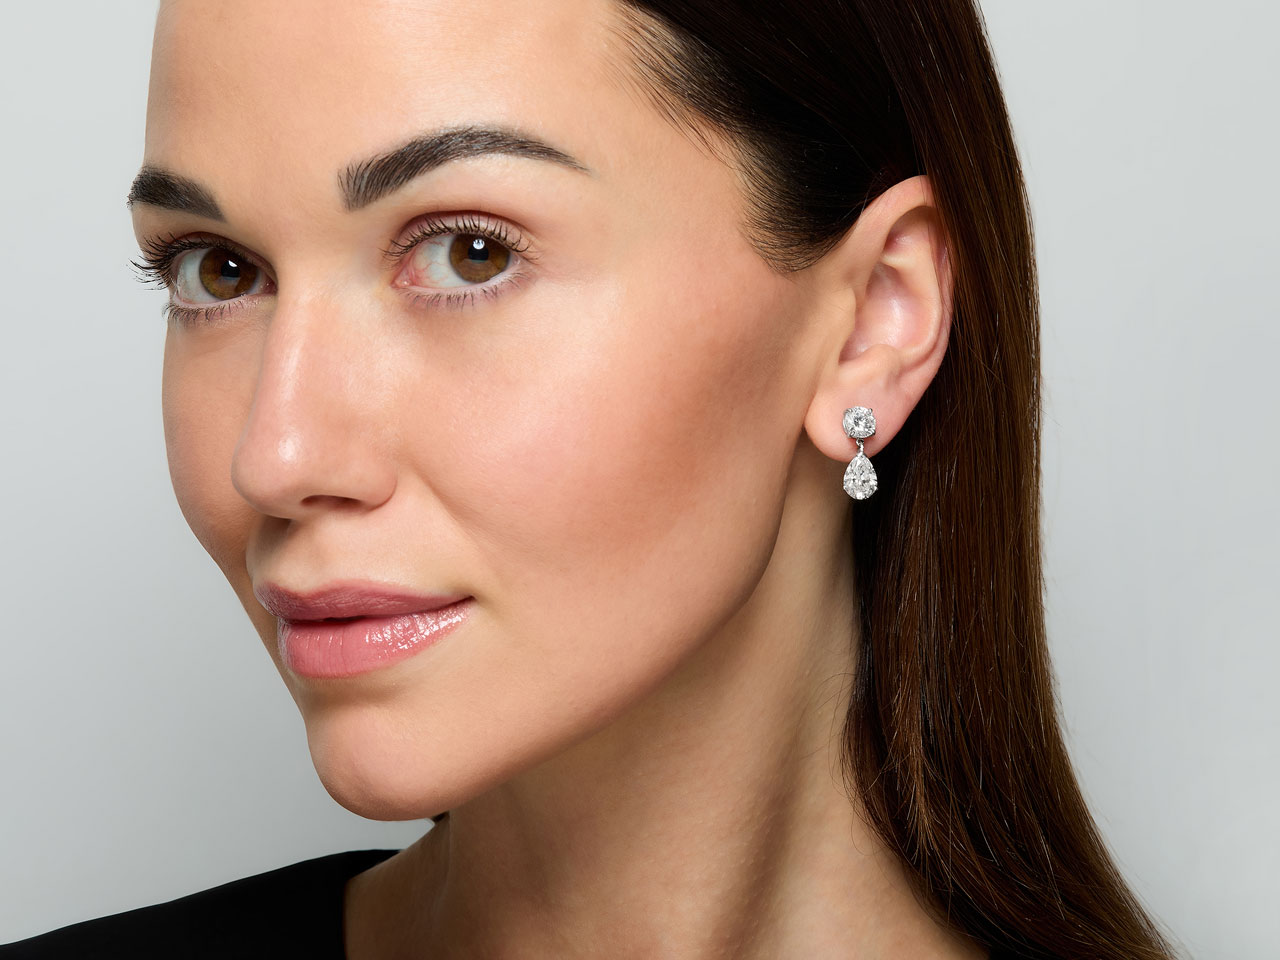 Beladora 'Bespoke' Diamond Drop Earrings, 5.04 total carats, in Platinum